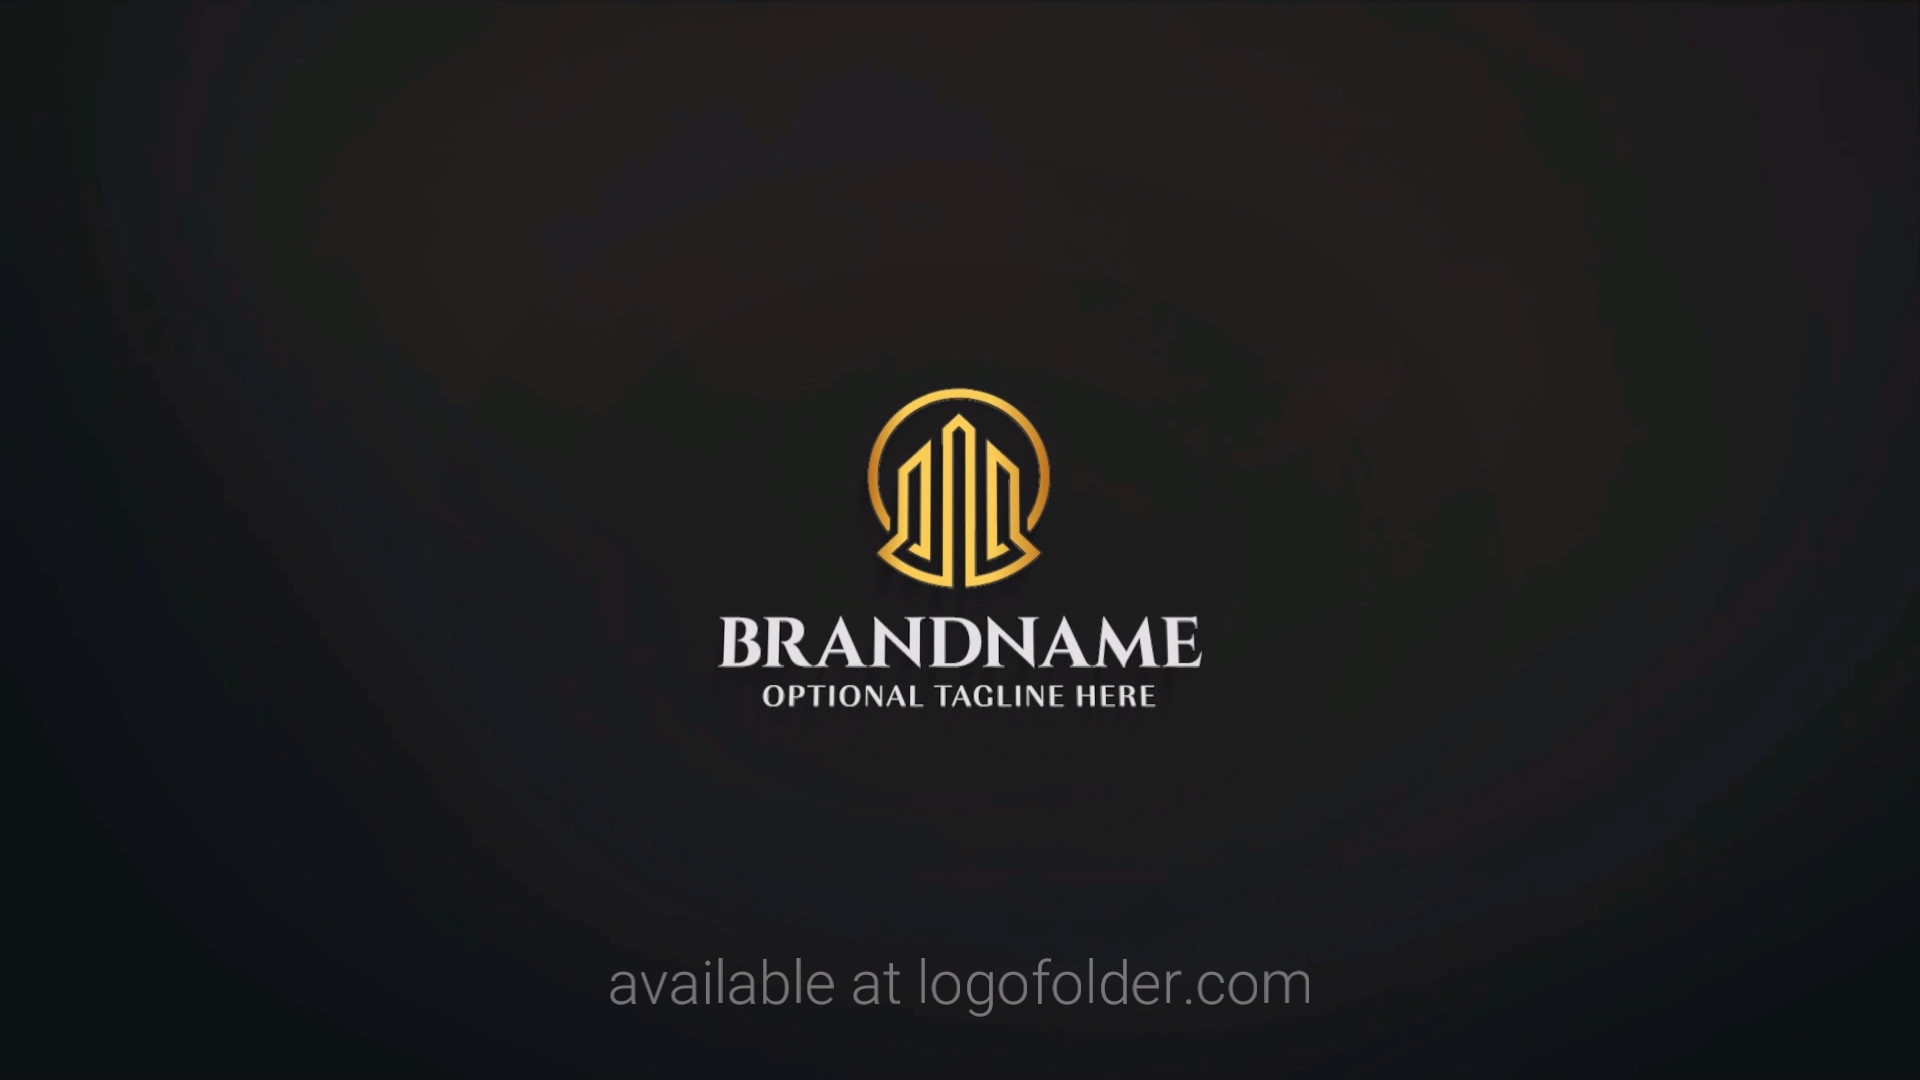 10 planting Logo branding ideas